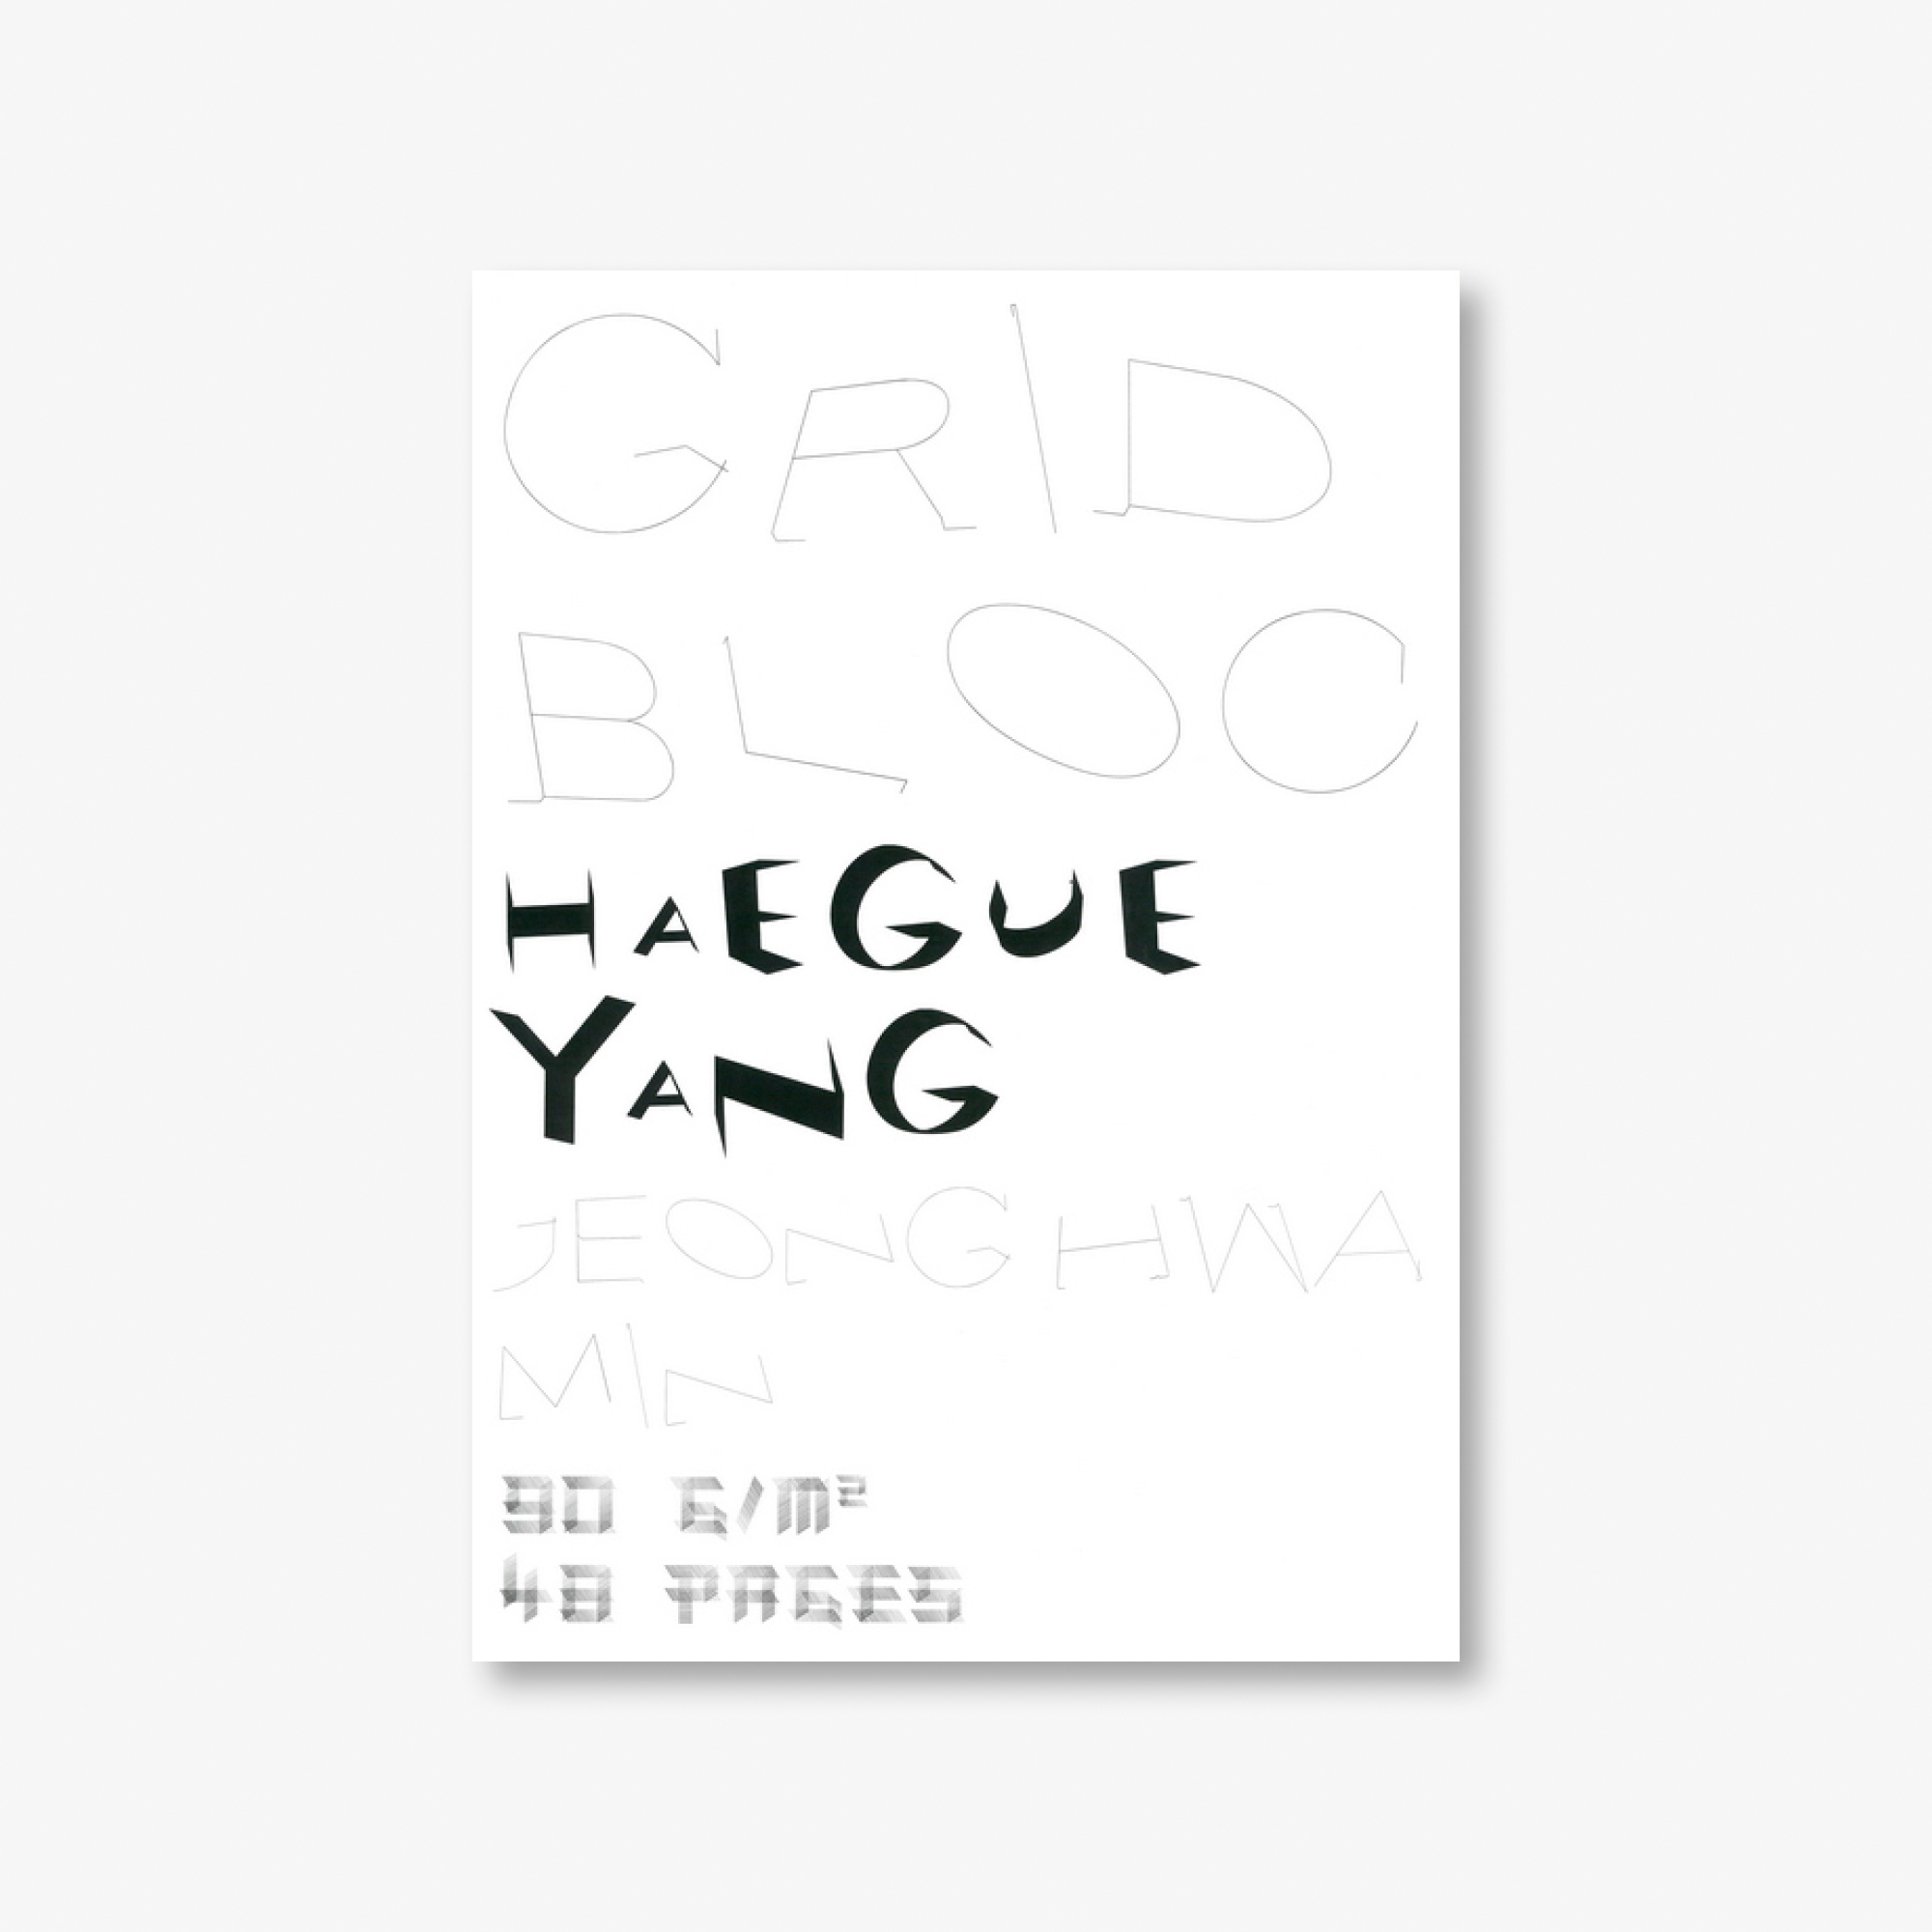 Haegue Yang: GRID BLOC